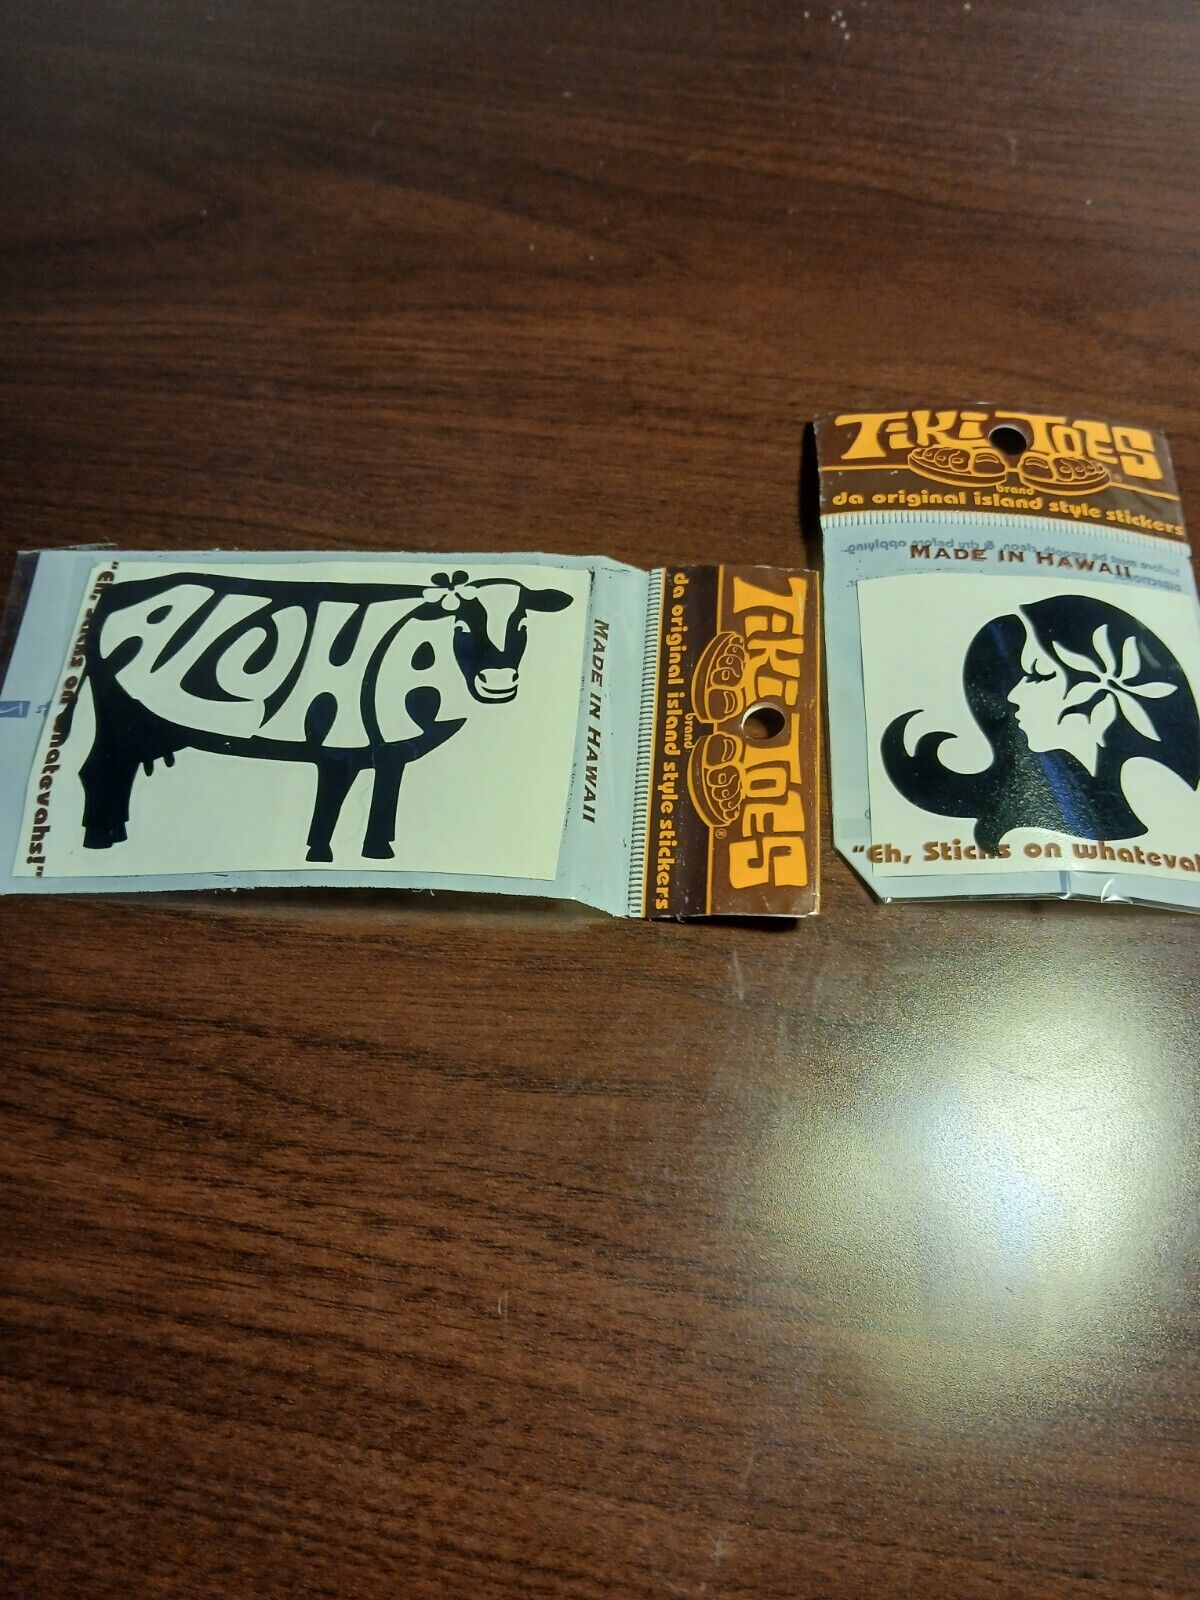 Lot of 2 Tiki Toes Hawaii Island style Vinyl Stickers Has Wrinkle